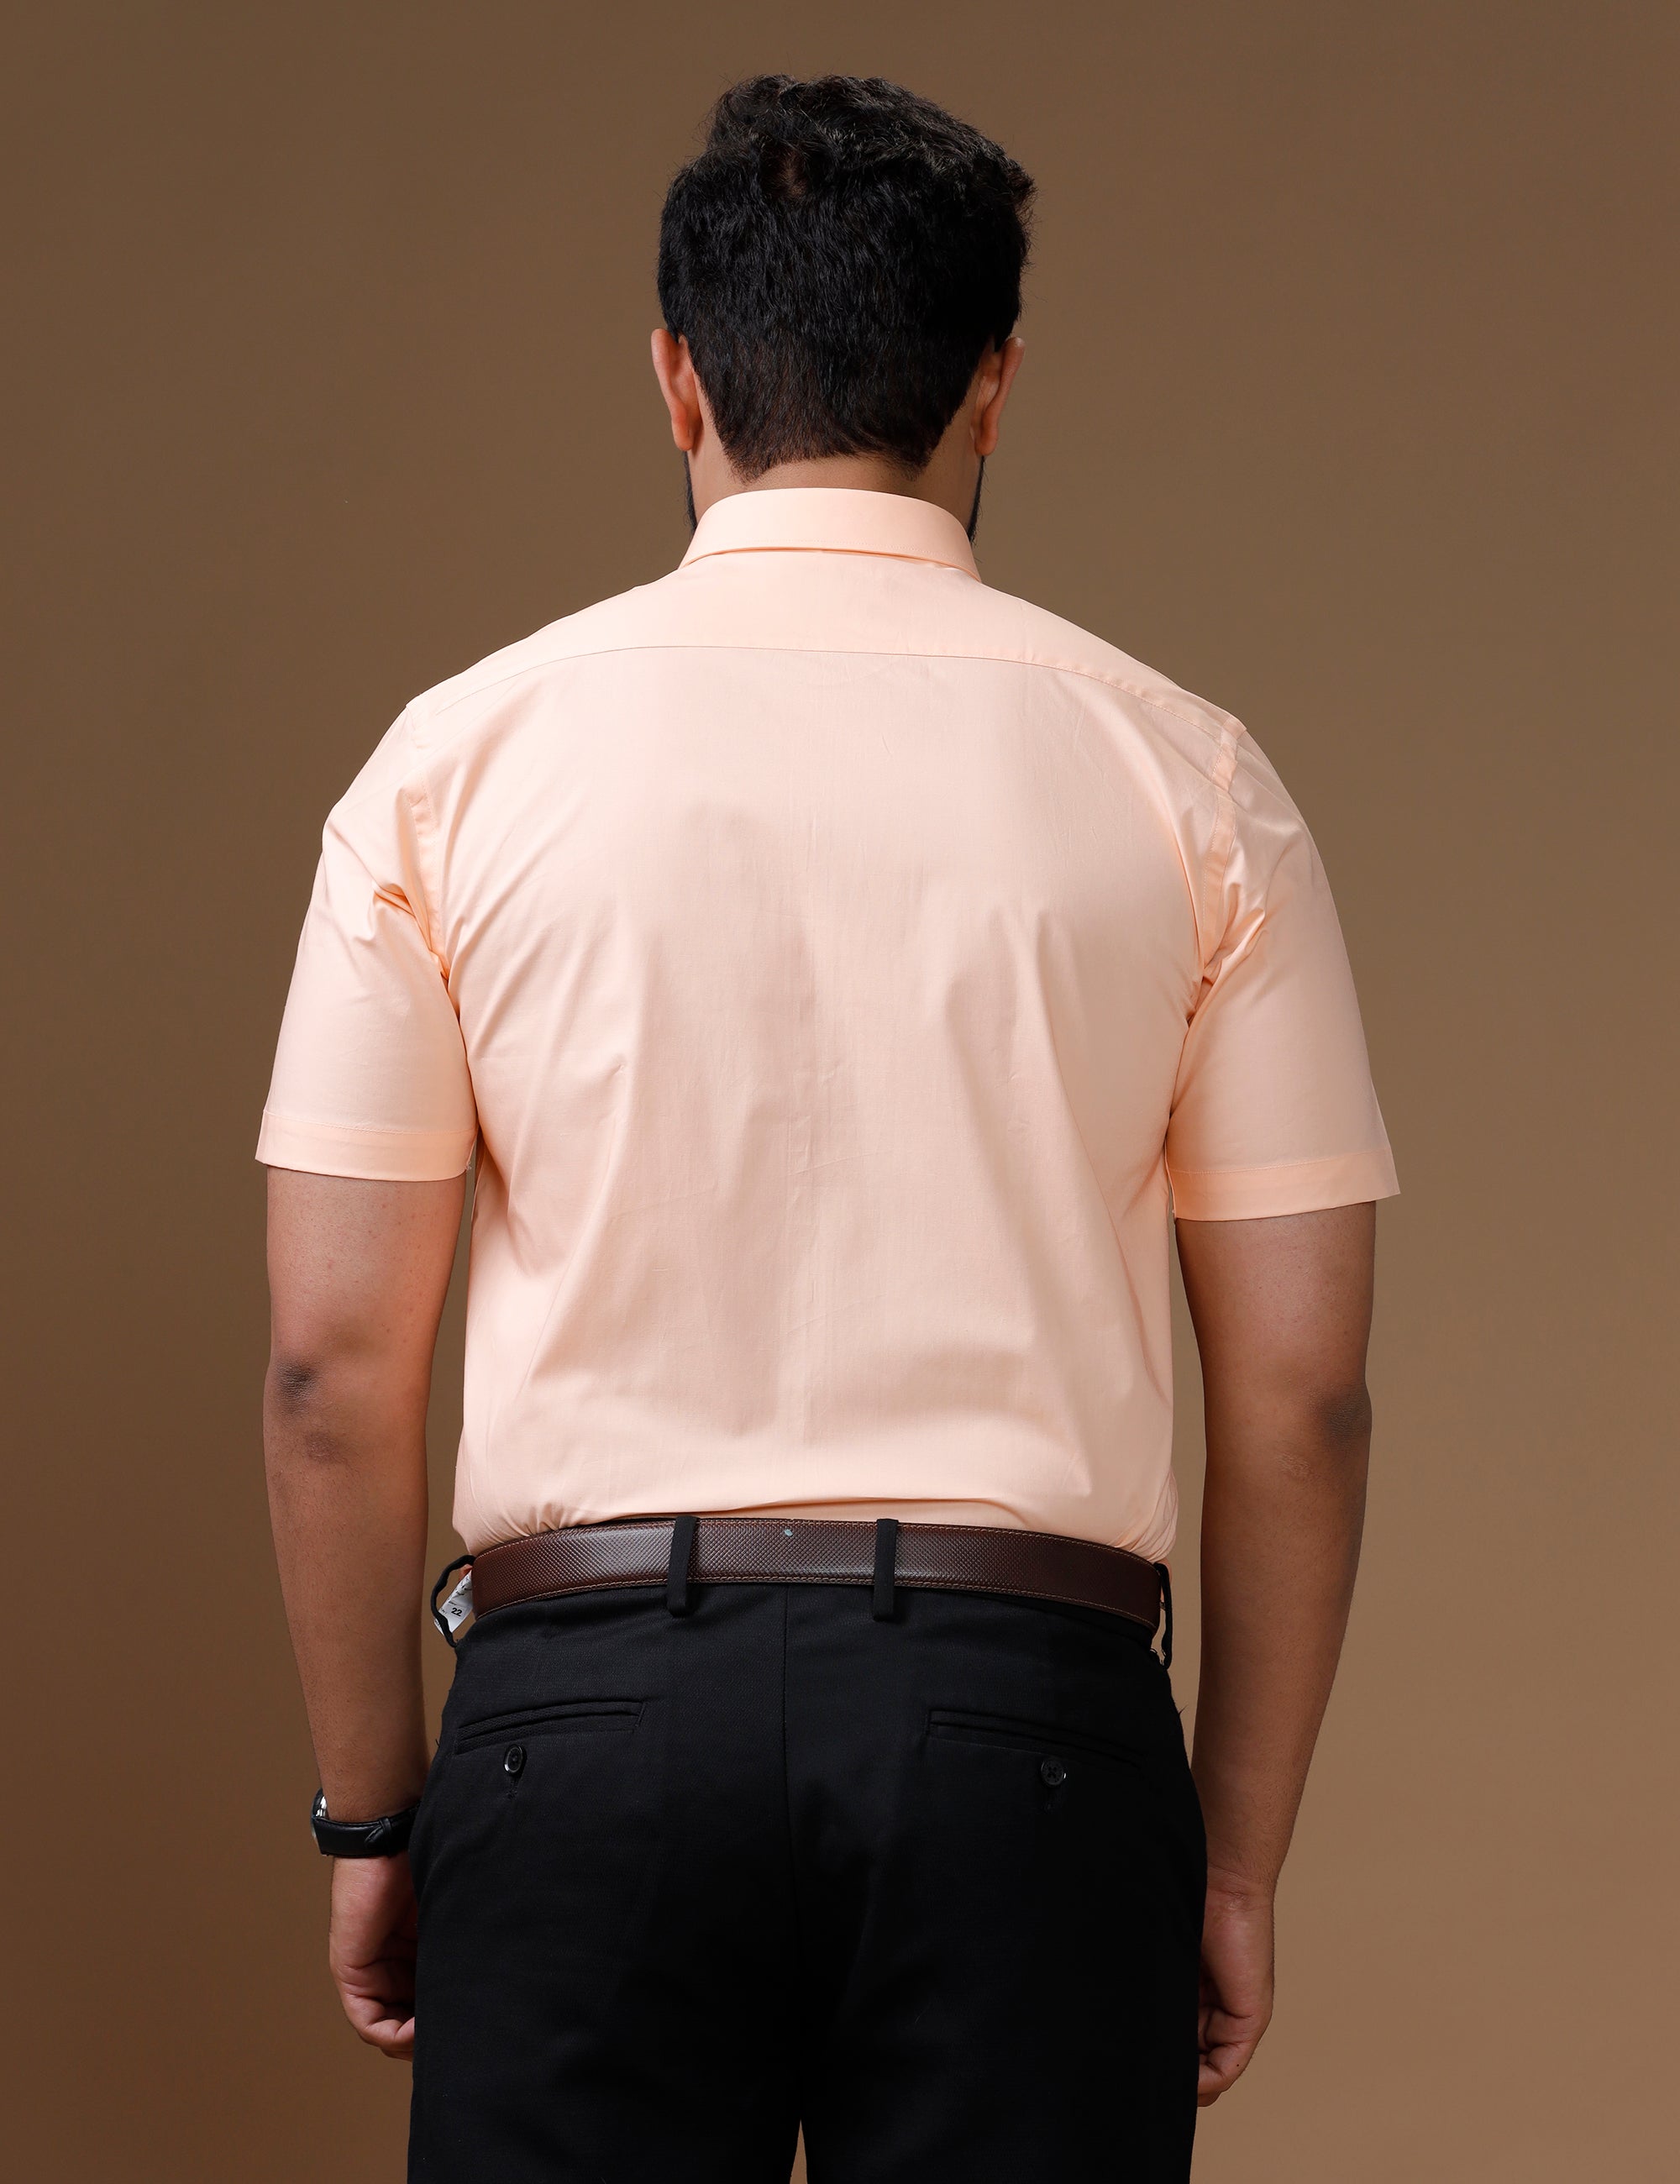 Mens Formal Cotton Spandex 2 Way Stretch Half Sleeves Saffron Shirt LY7-Back view